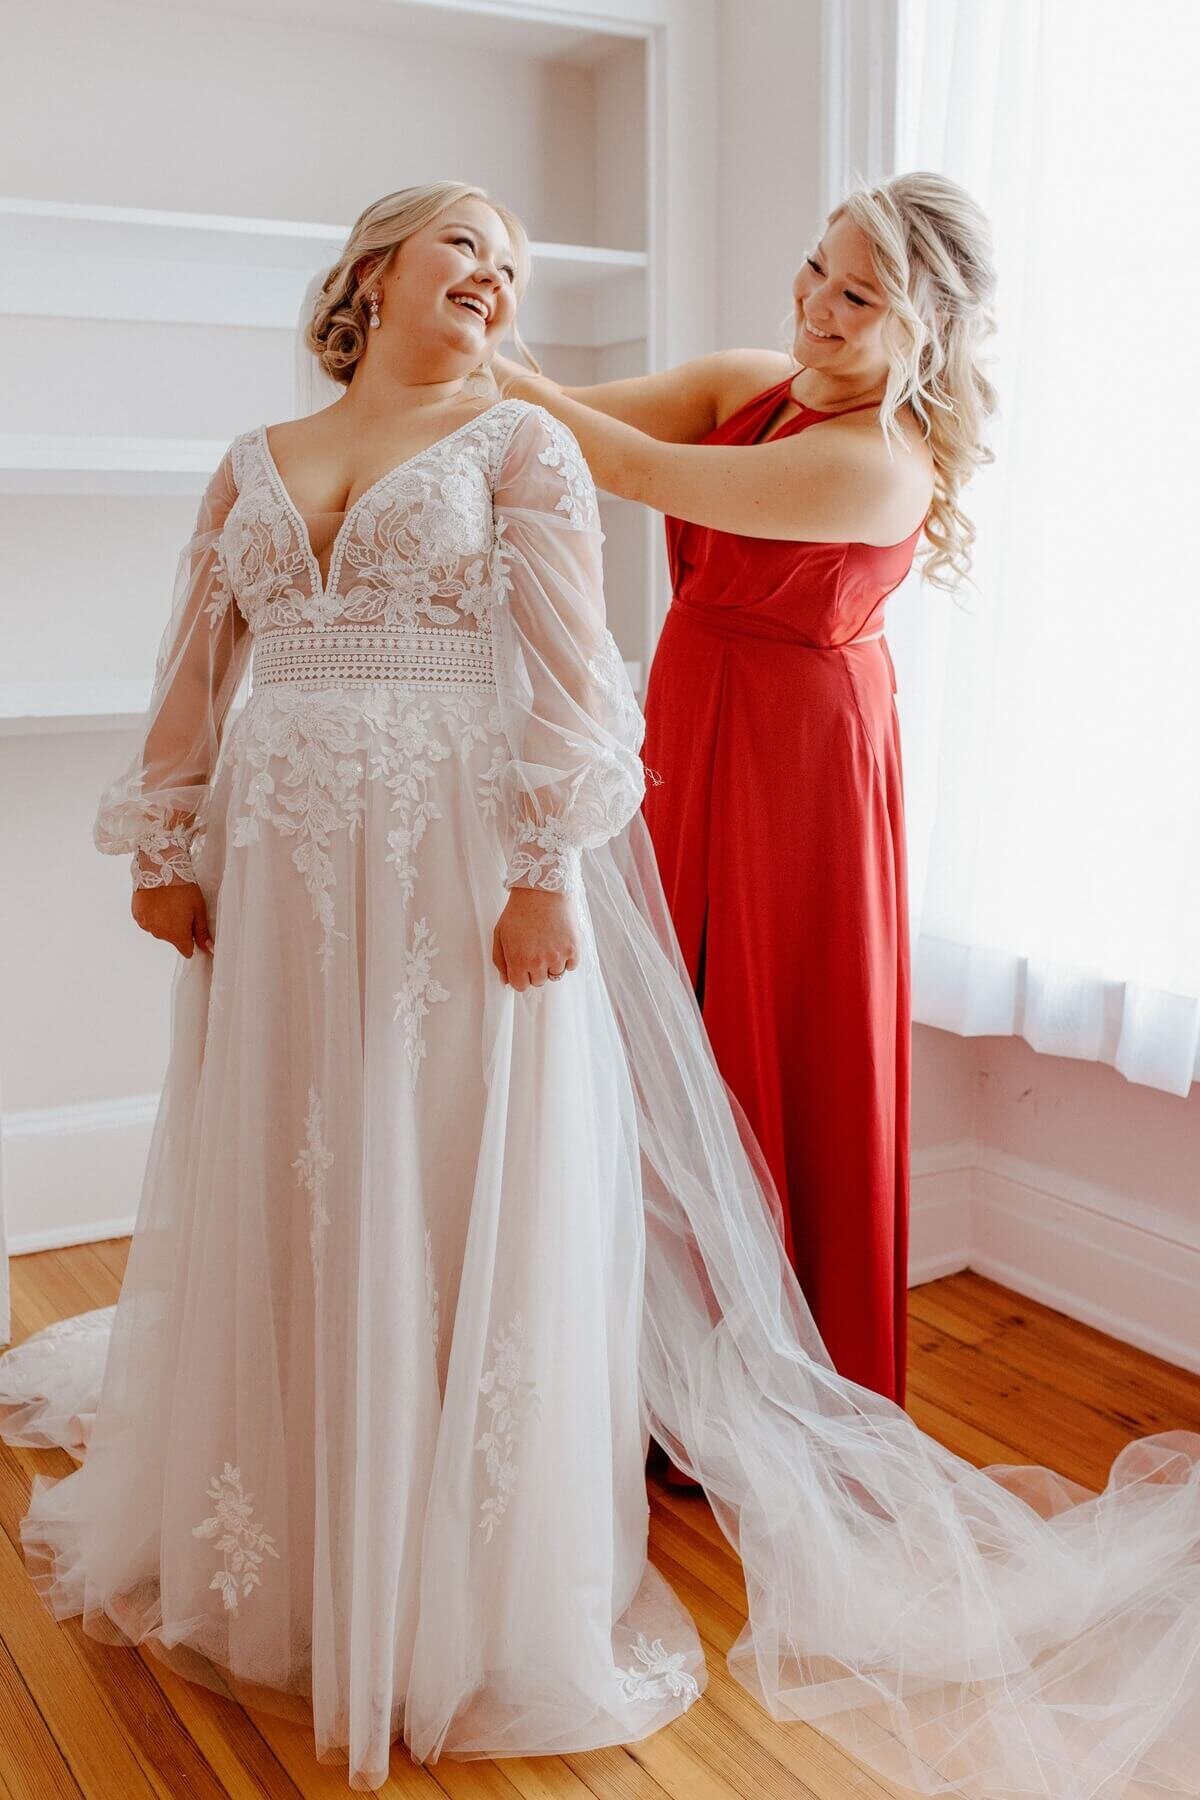 12-kara-loryn-photography-bridesmaid-helping-bride-with-wedding-dress